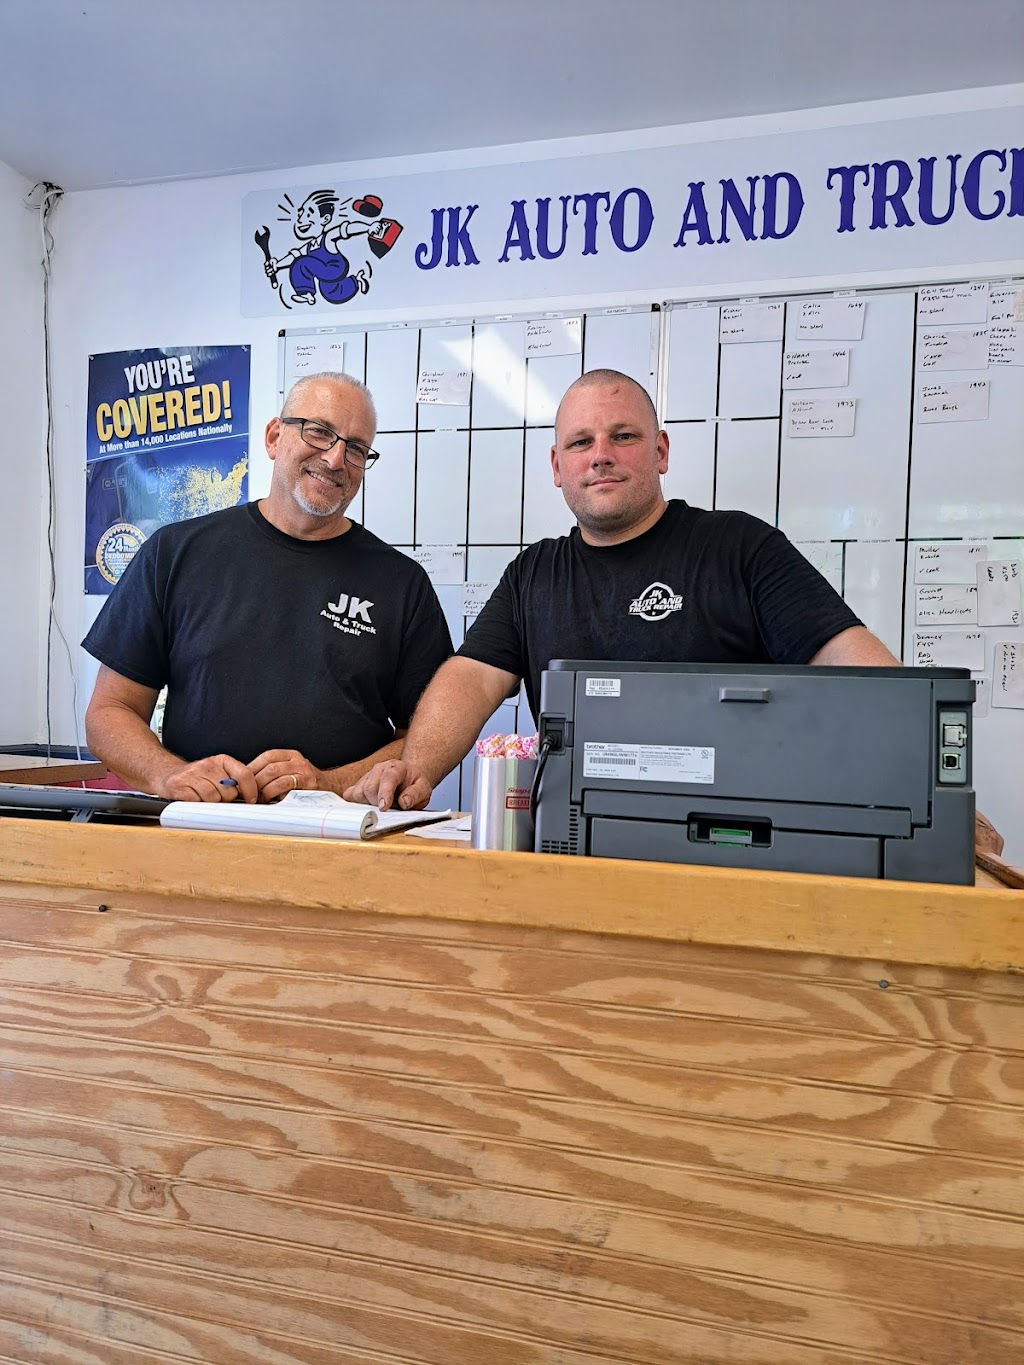 JK Auto And Truck Repair | 1831 US-206, Southampton Township, NJ 08088 | Phone: (609) 925-9063